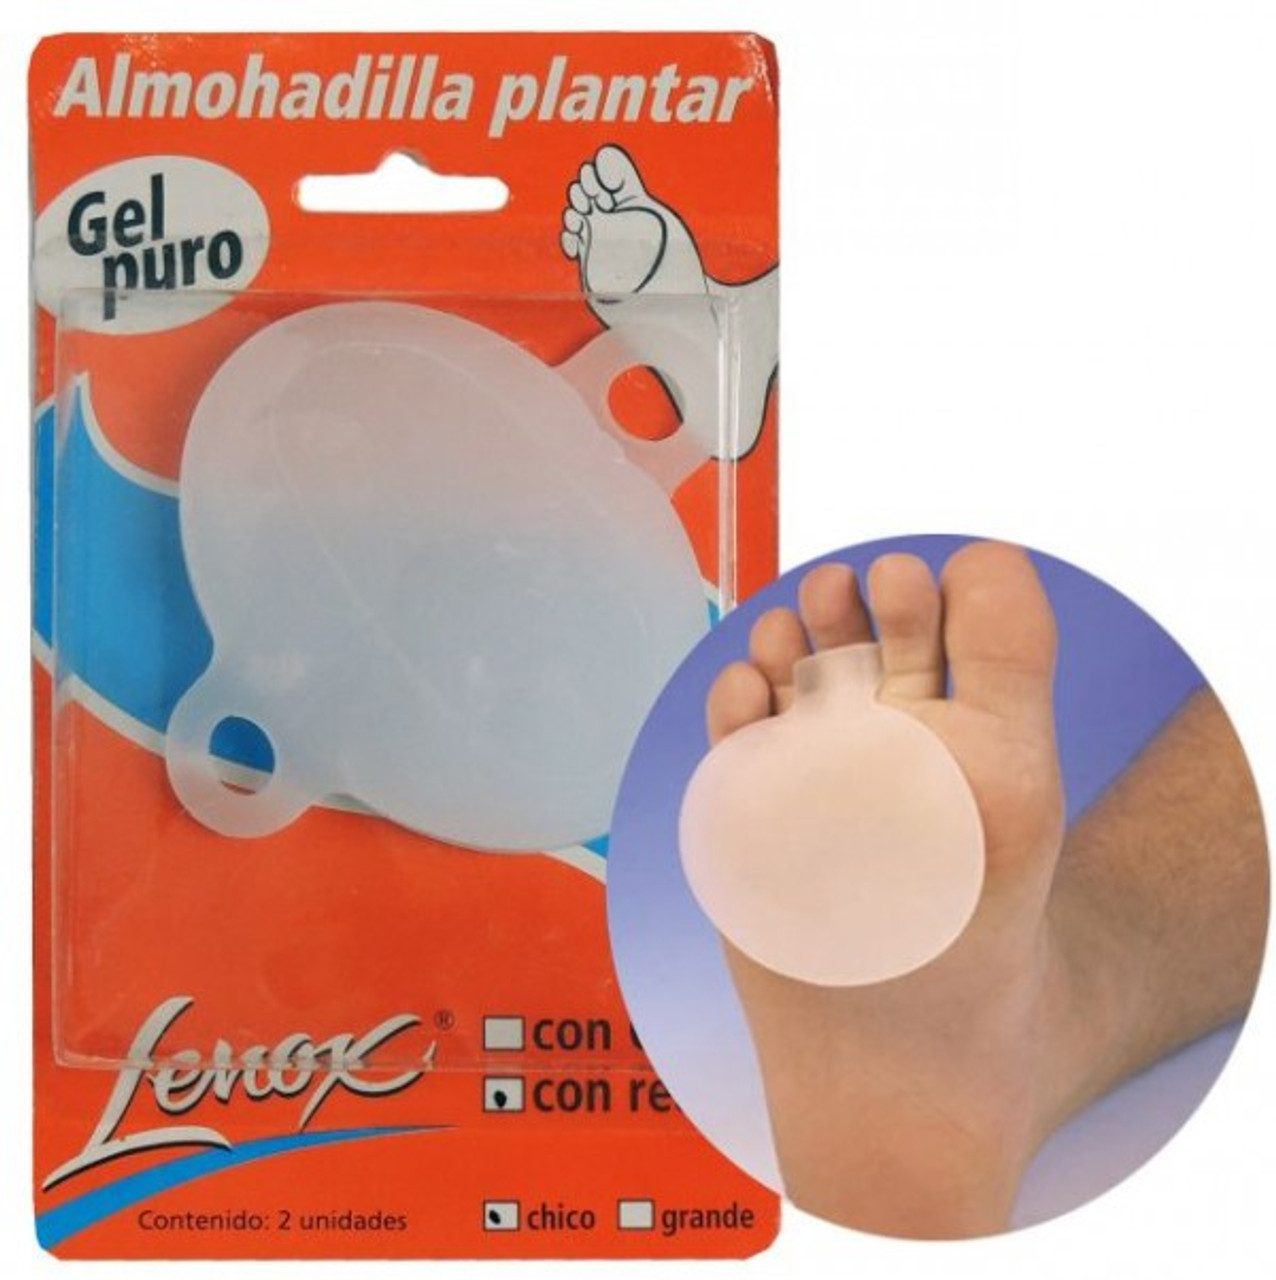 Lenox Almohadilla Plantar Chica Gel Puro Metatarsal Pads Polymer Gel Foot  Cushions Reduces Pression & Friction